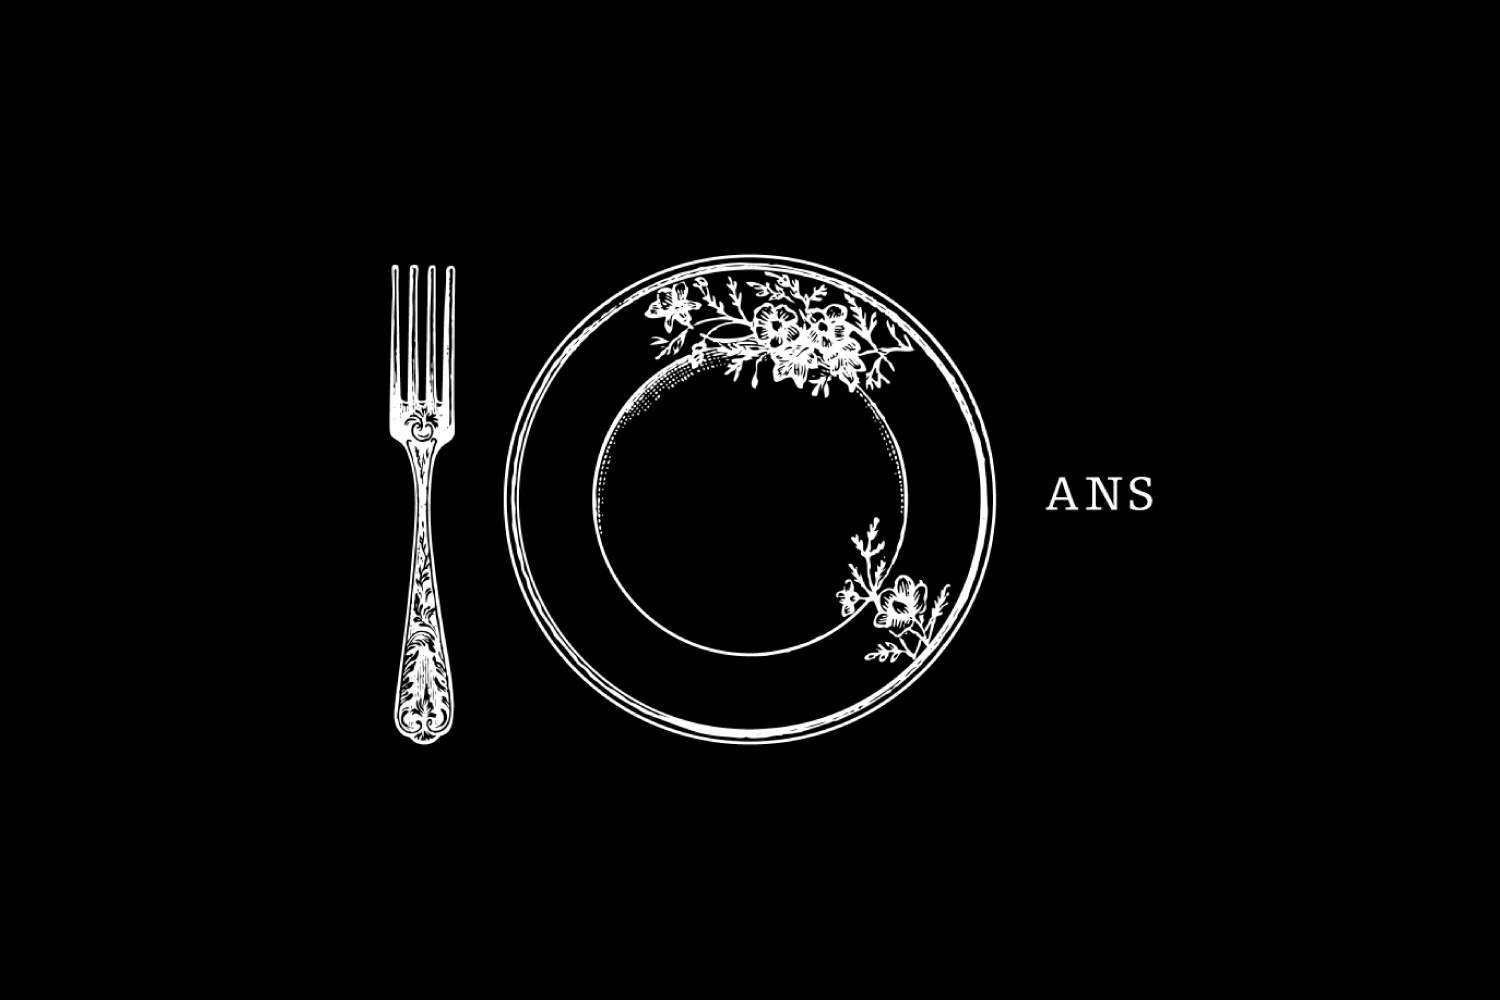 grandir sans frontieres degustation gourmande event logo, black and white, gourmet, fork and plate, 10 years logo, print design